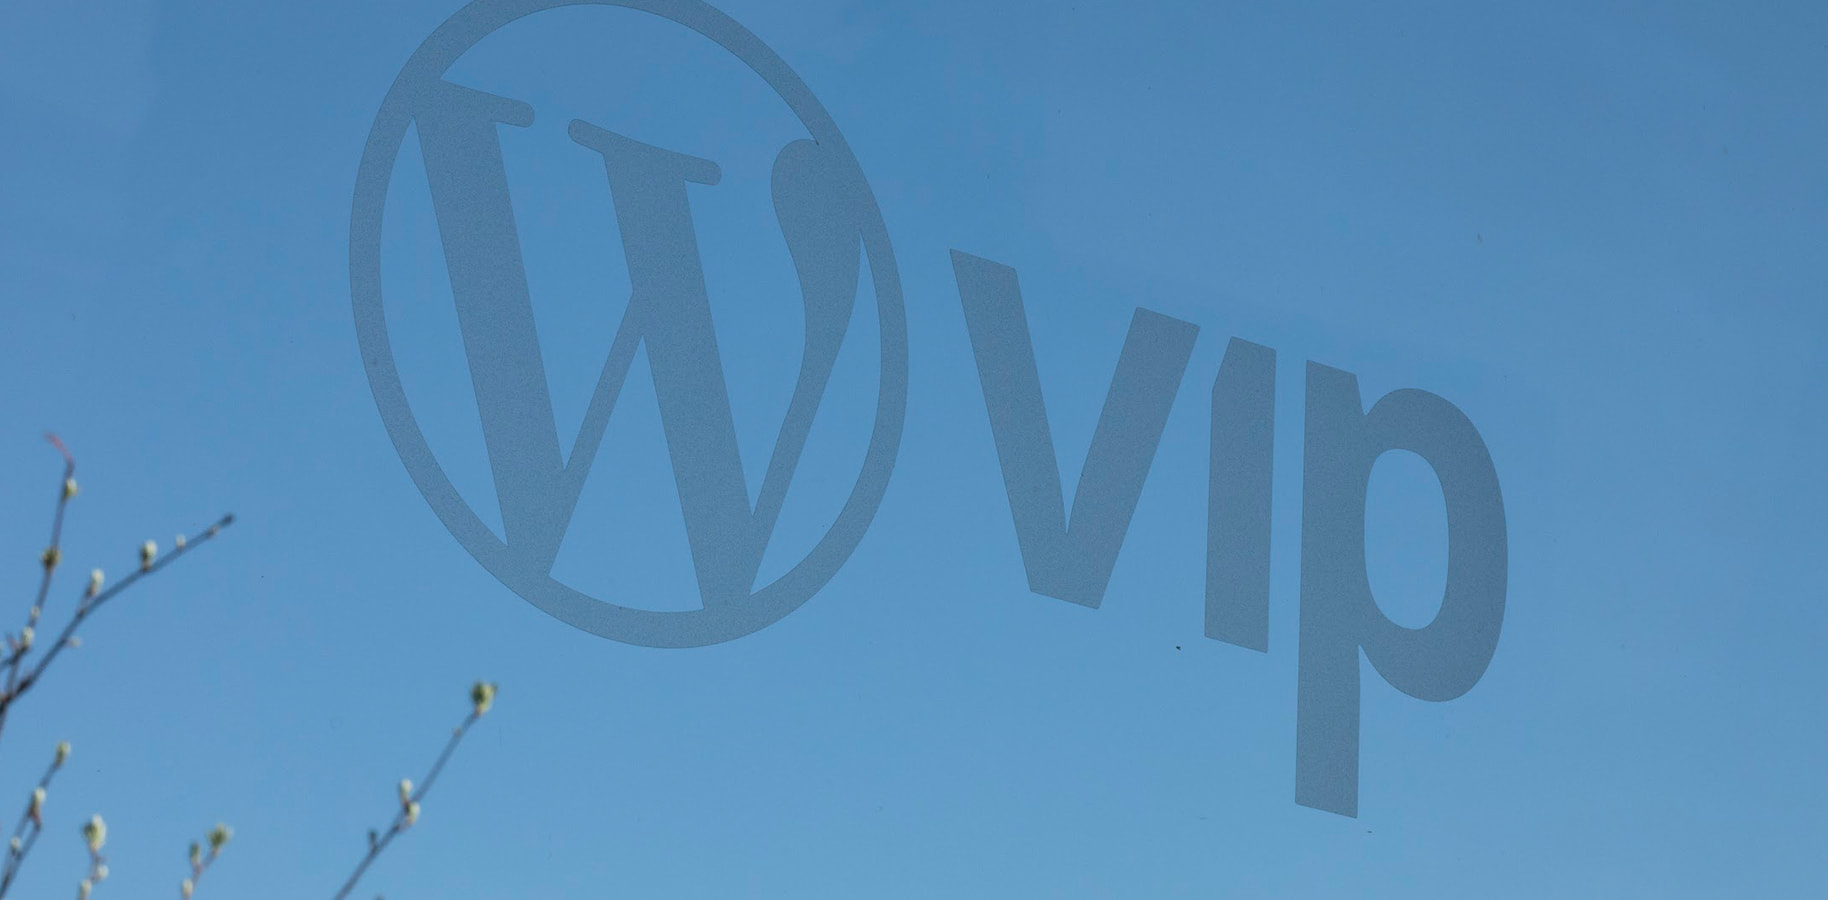 Wordpress VIP logo printed on window